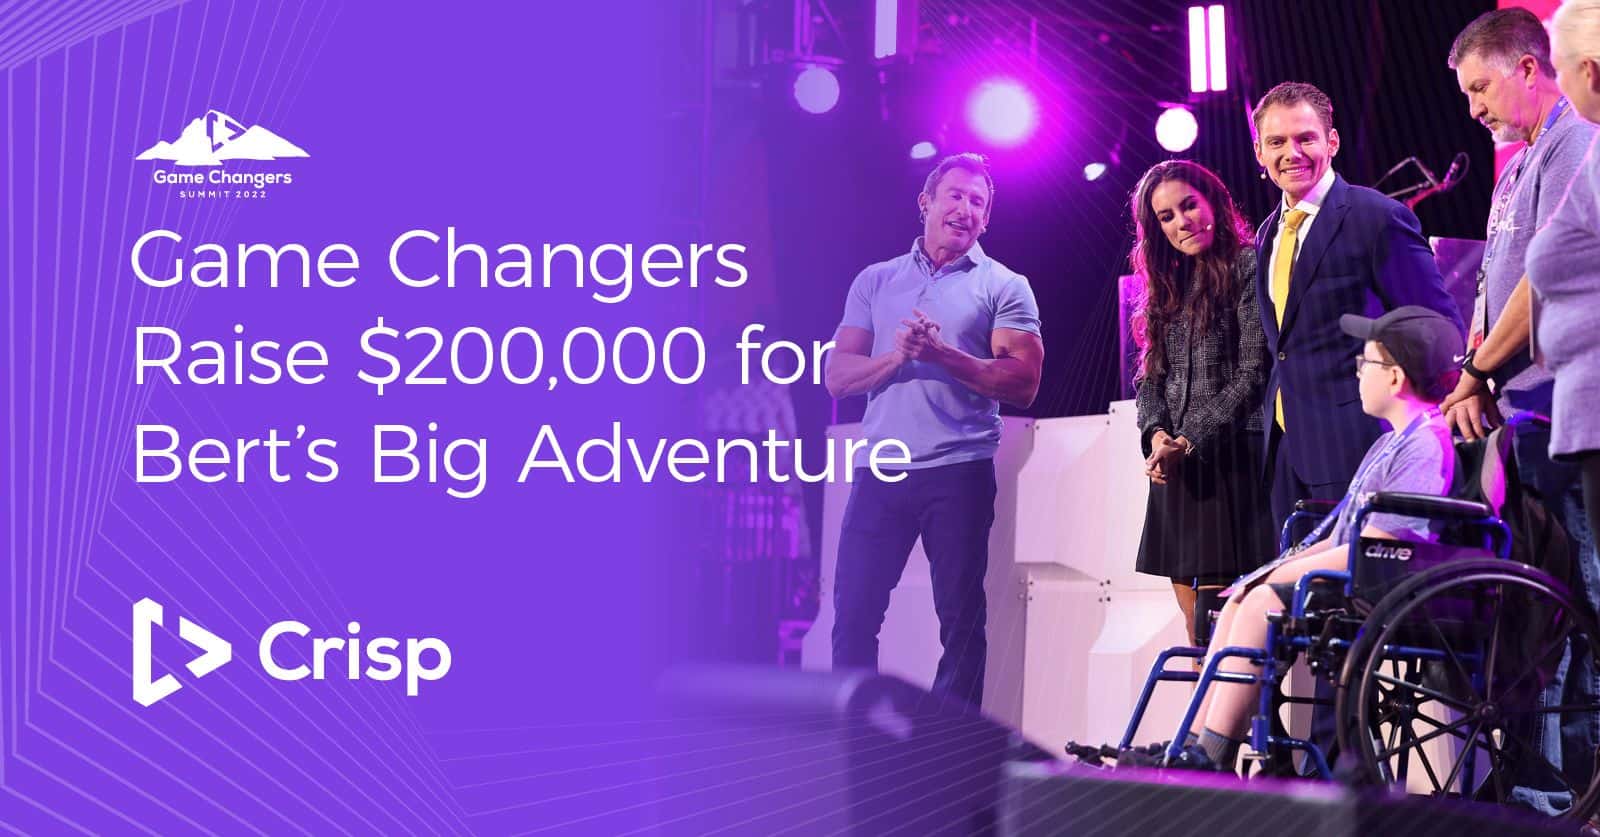 Game Changers Summit Attendees Raise $200,000 for Bert's Big Adventure